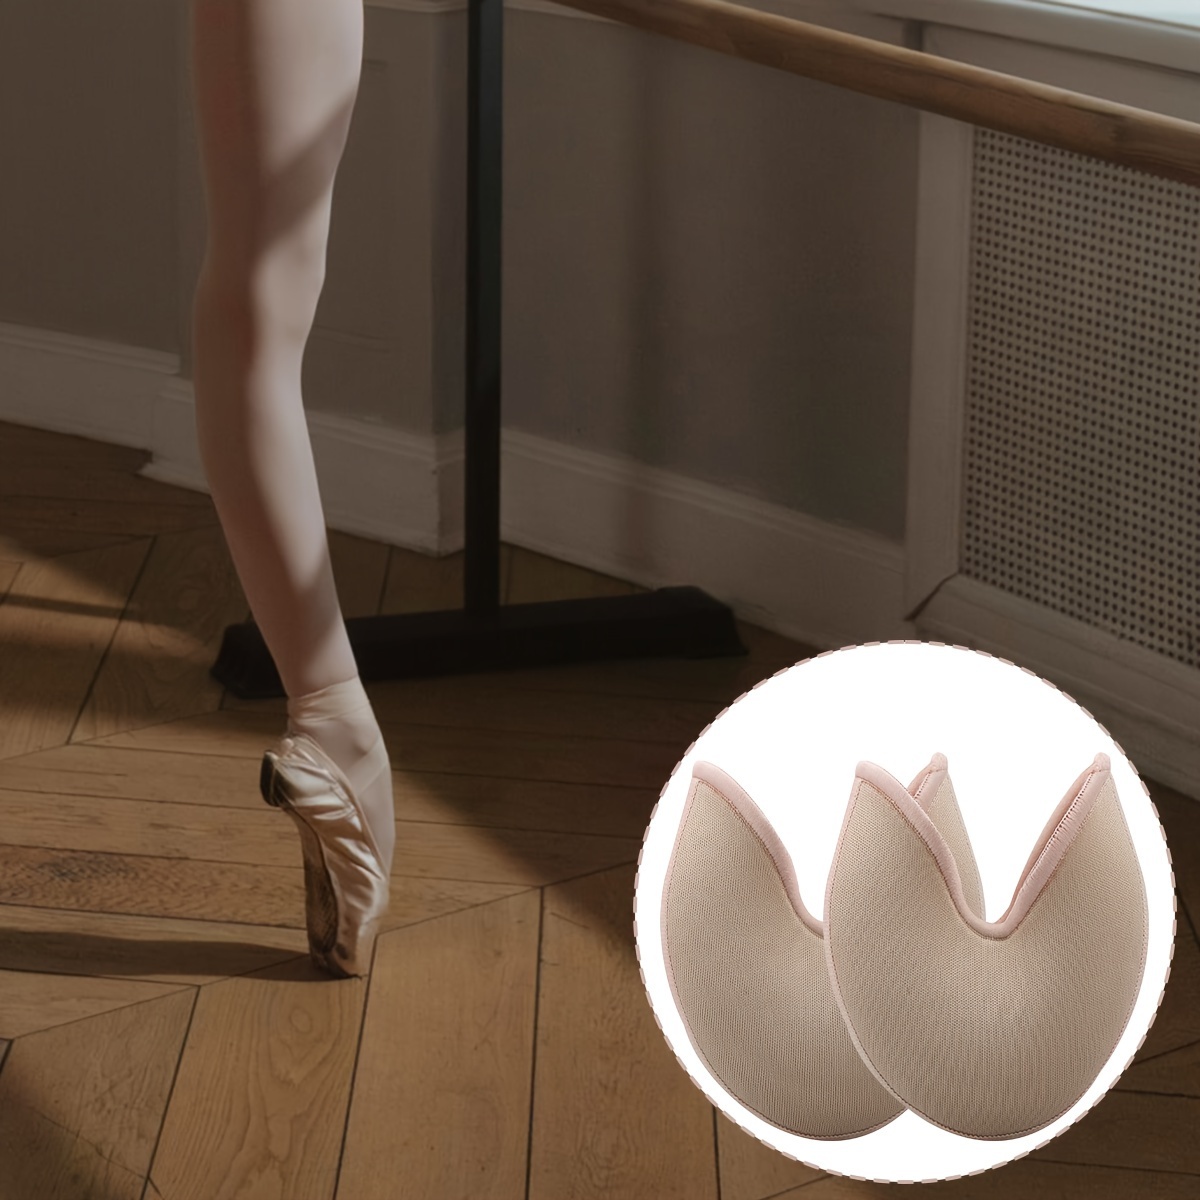 2Pcs Ballet Dance Pointe Shoe Socks Pads Cushion for Ballet Dancer Toe Caps